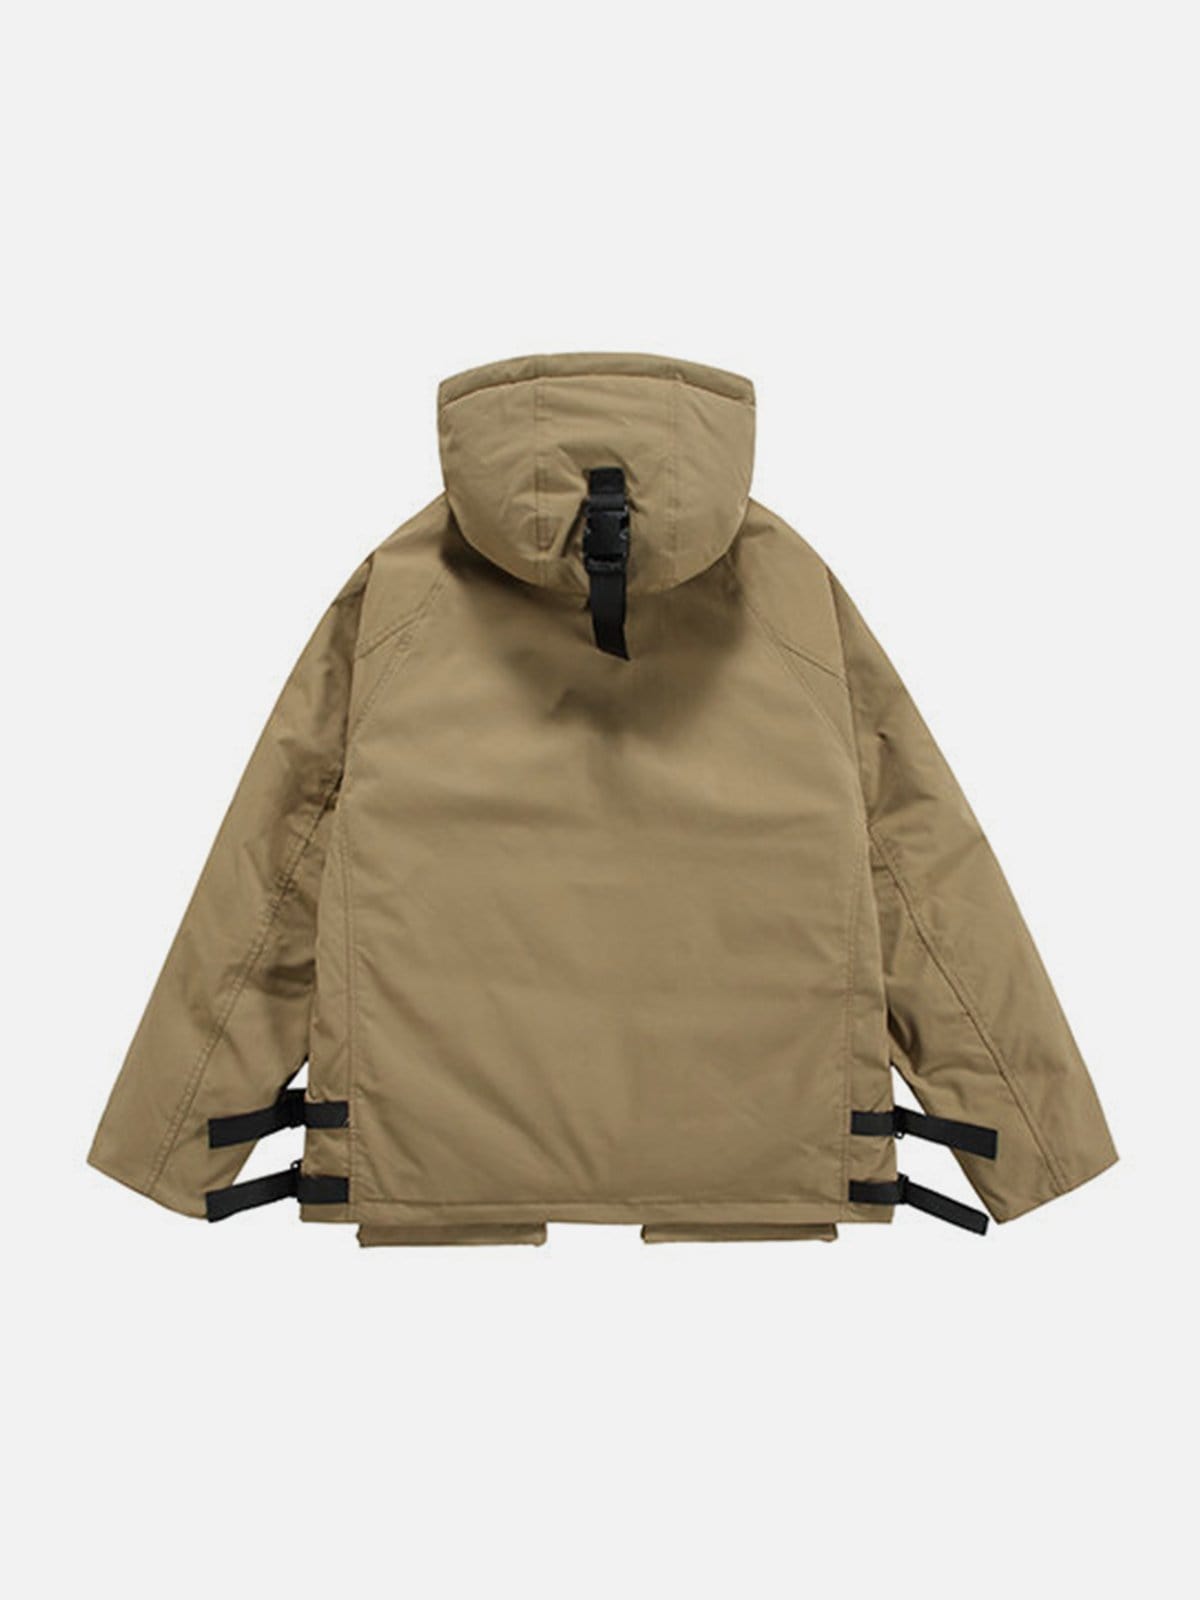 Multi Pockets Ribbons Hooded Winter Coat Streetwear Brand Techwear Combat Tactical YUGEN THEORY